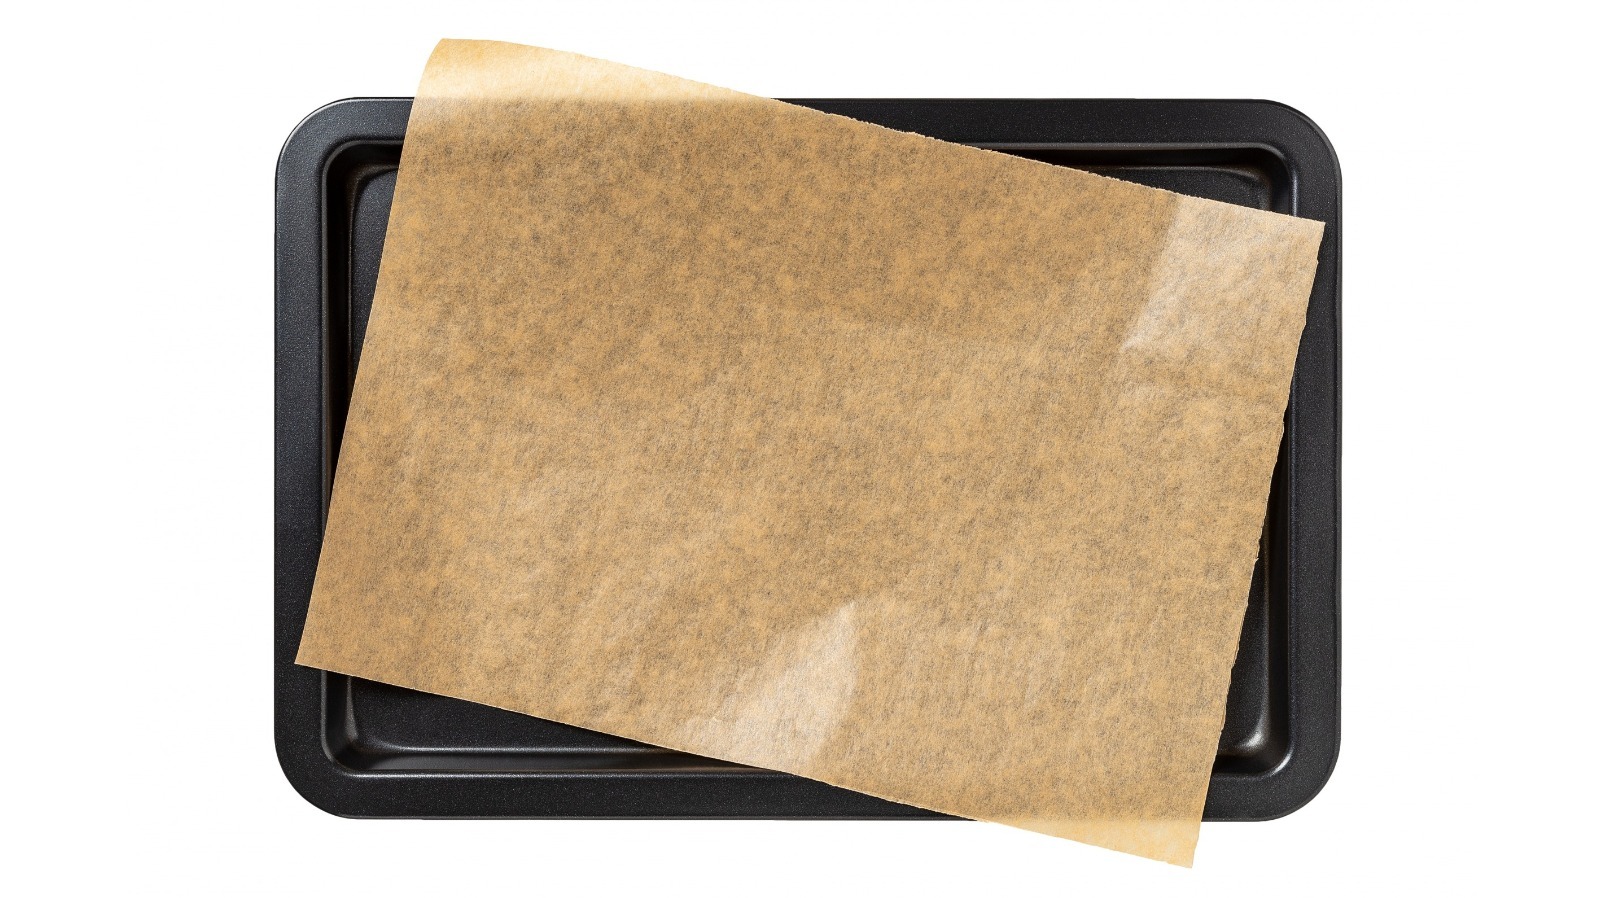 White Non-Stick Food Grade Baking Paper Roll Parchment Paper